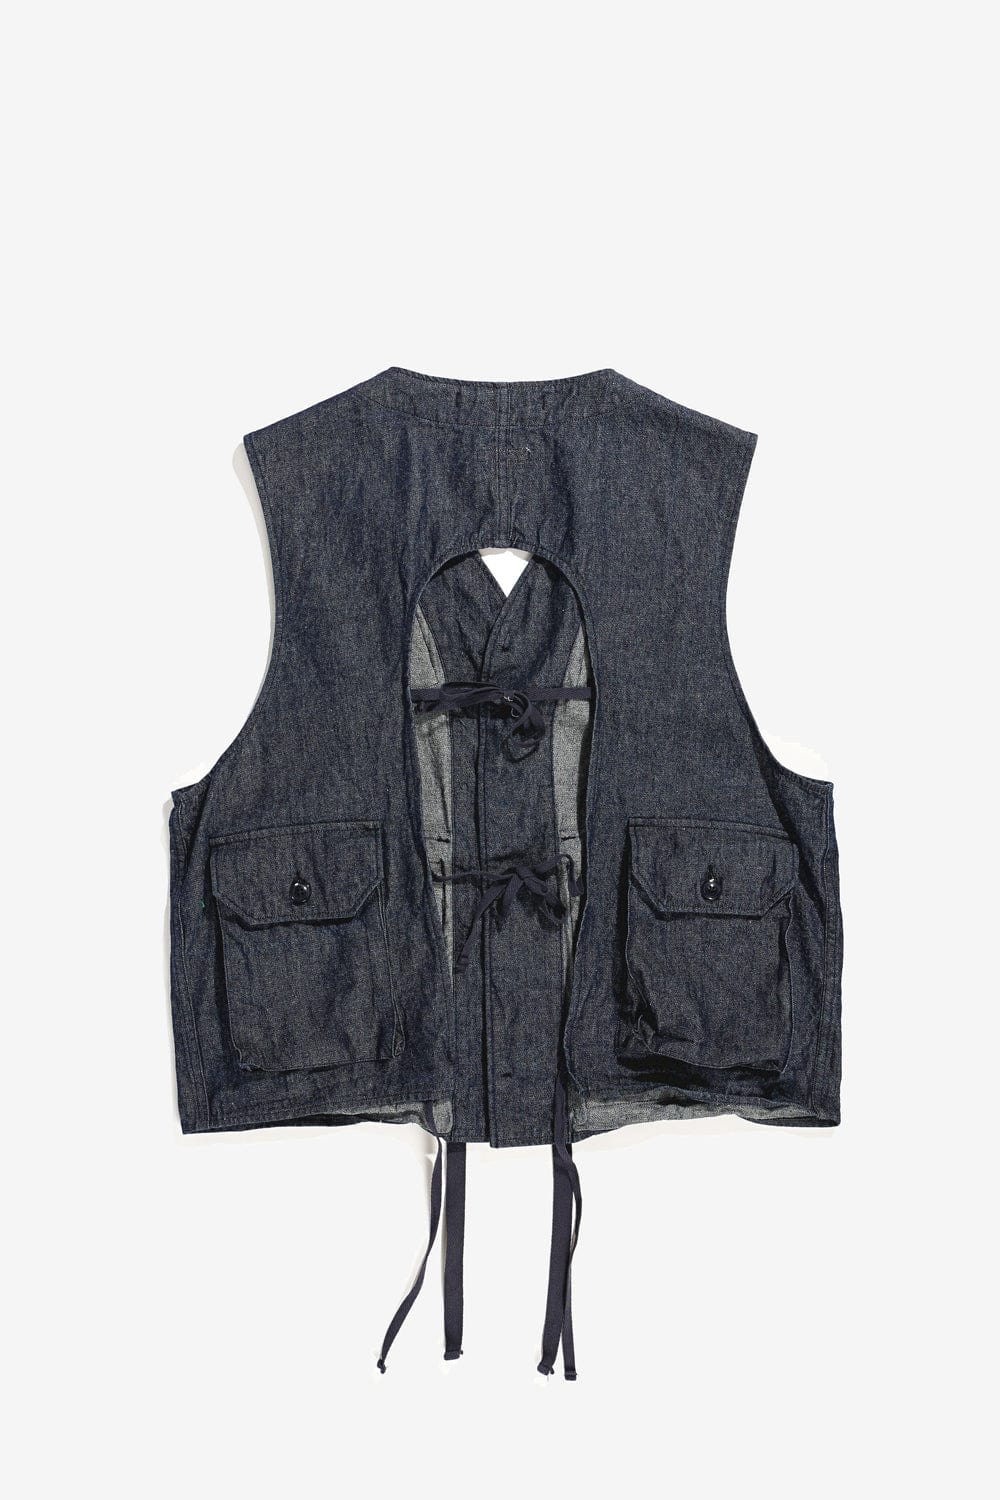 Engineered Garments C-1 Vest (Indigo Industrial 8oz Denim